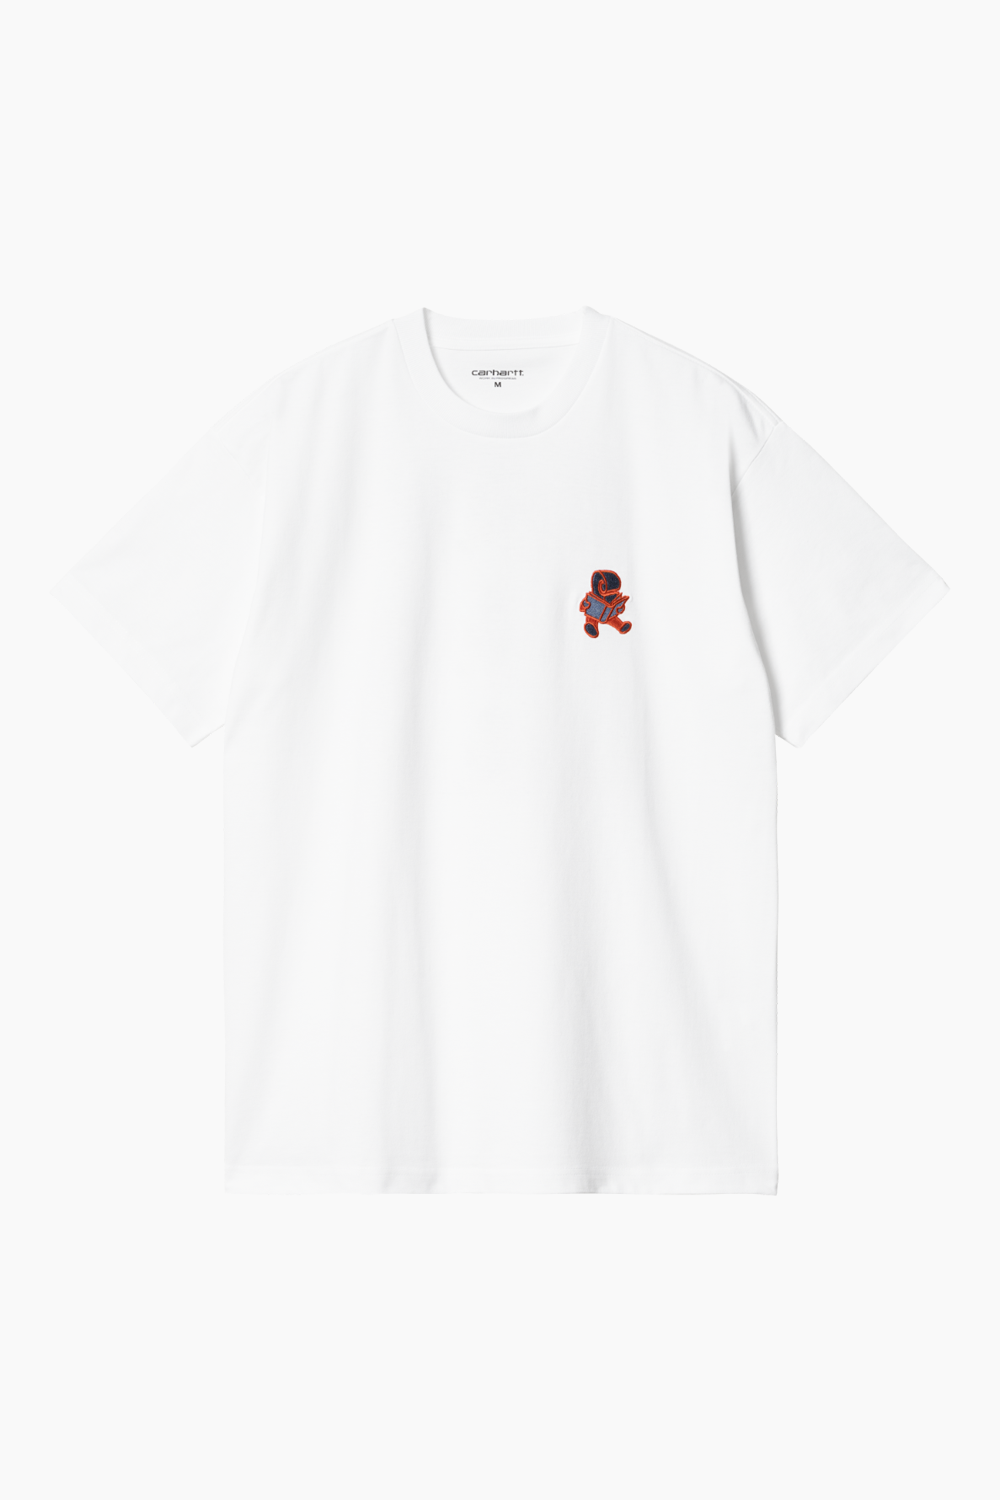 W' S/S Reading Club T-shirt - White - Carhartt WIP